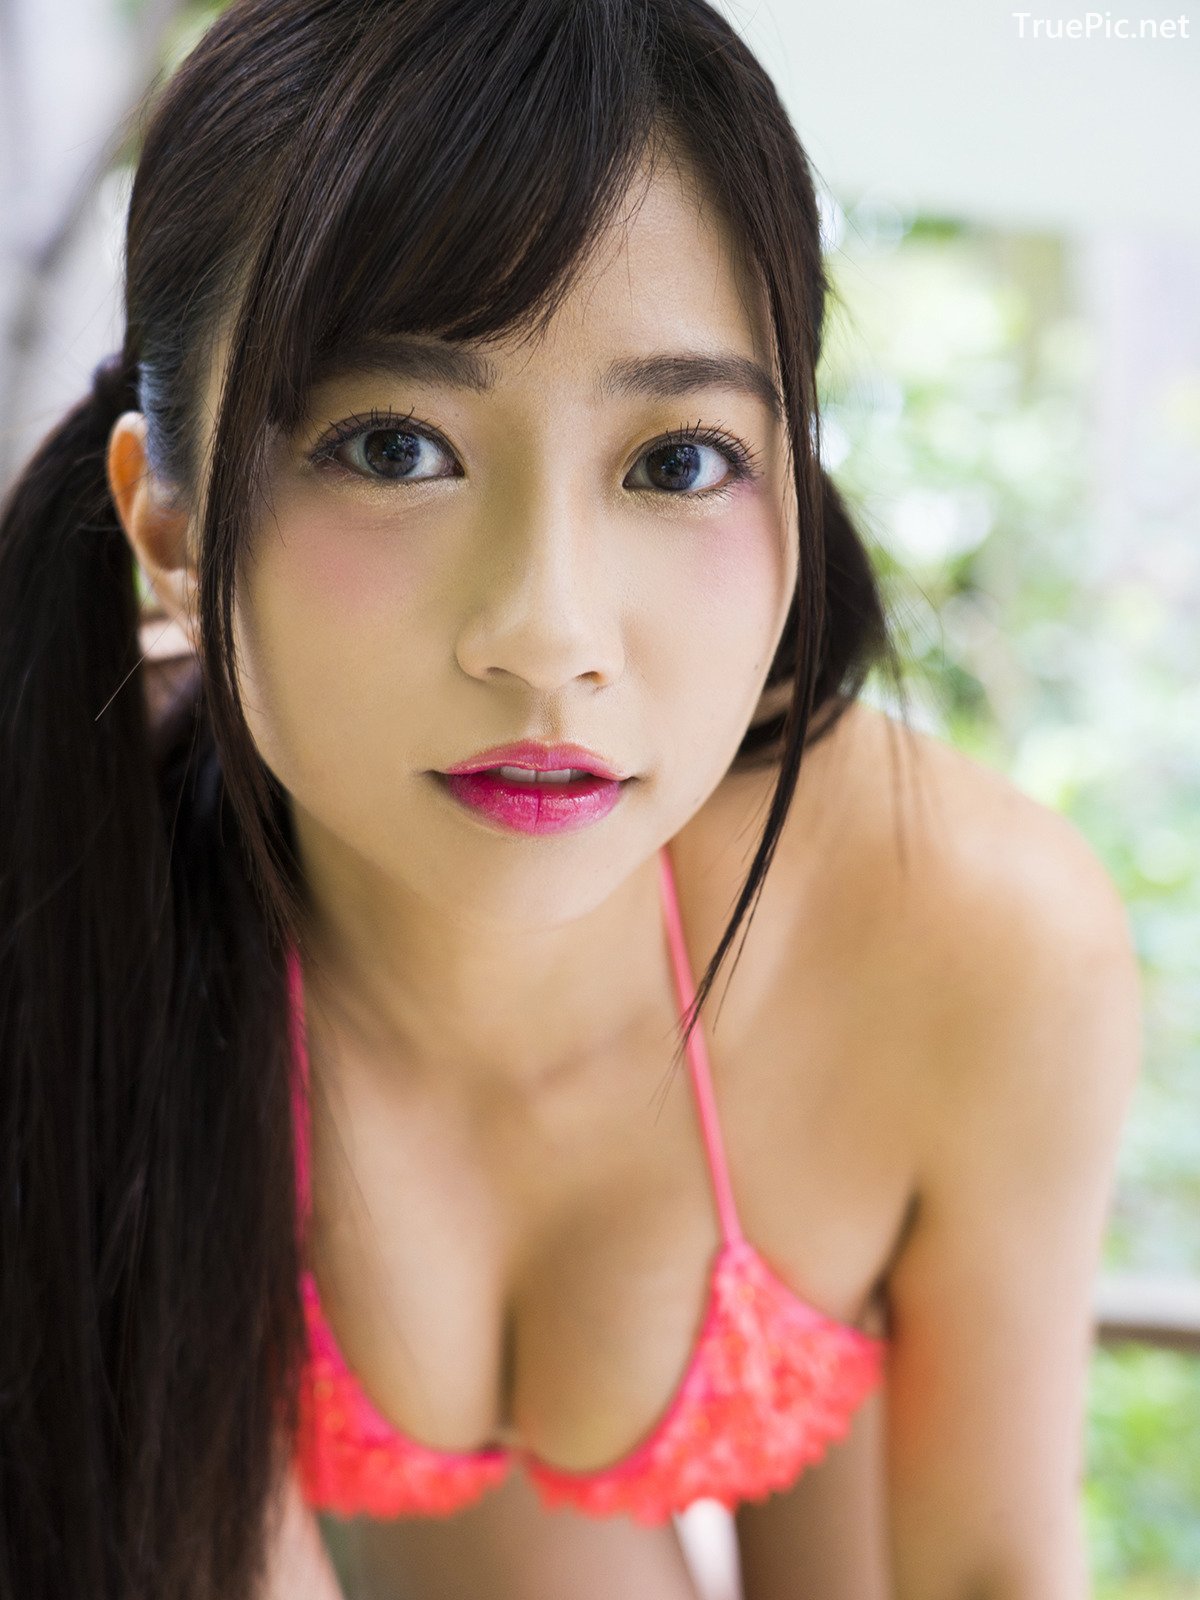 Image Japanese Gravure Model - Sayaka Ohnuki - Maiden Love Story - TruePic.net - Picture-16